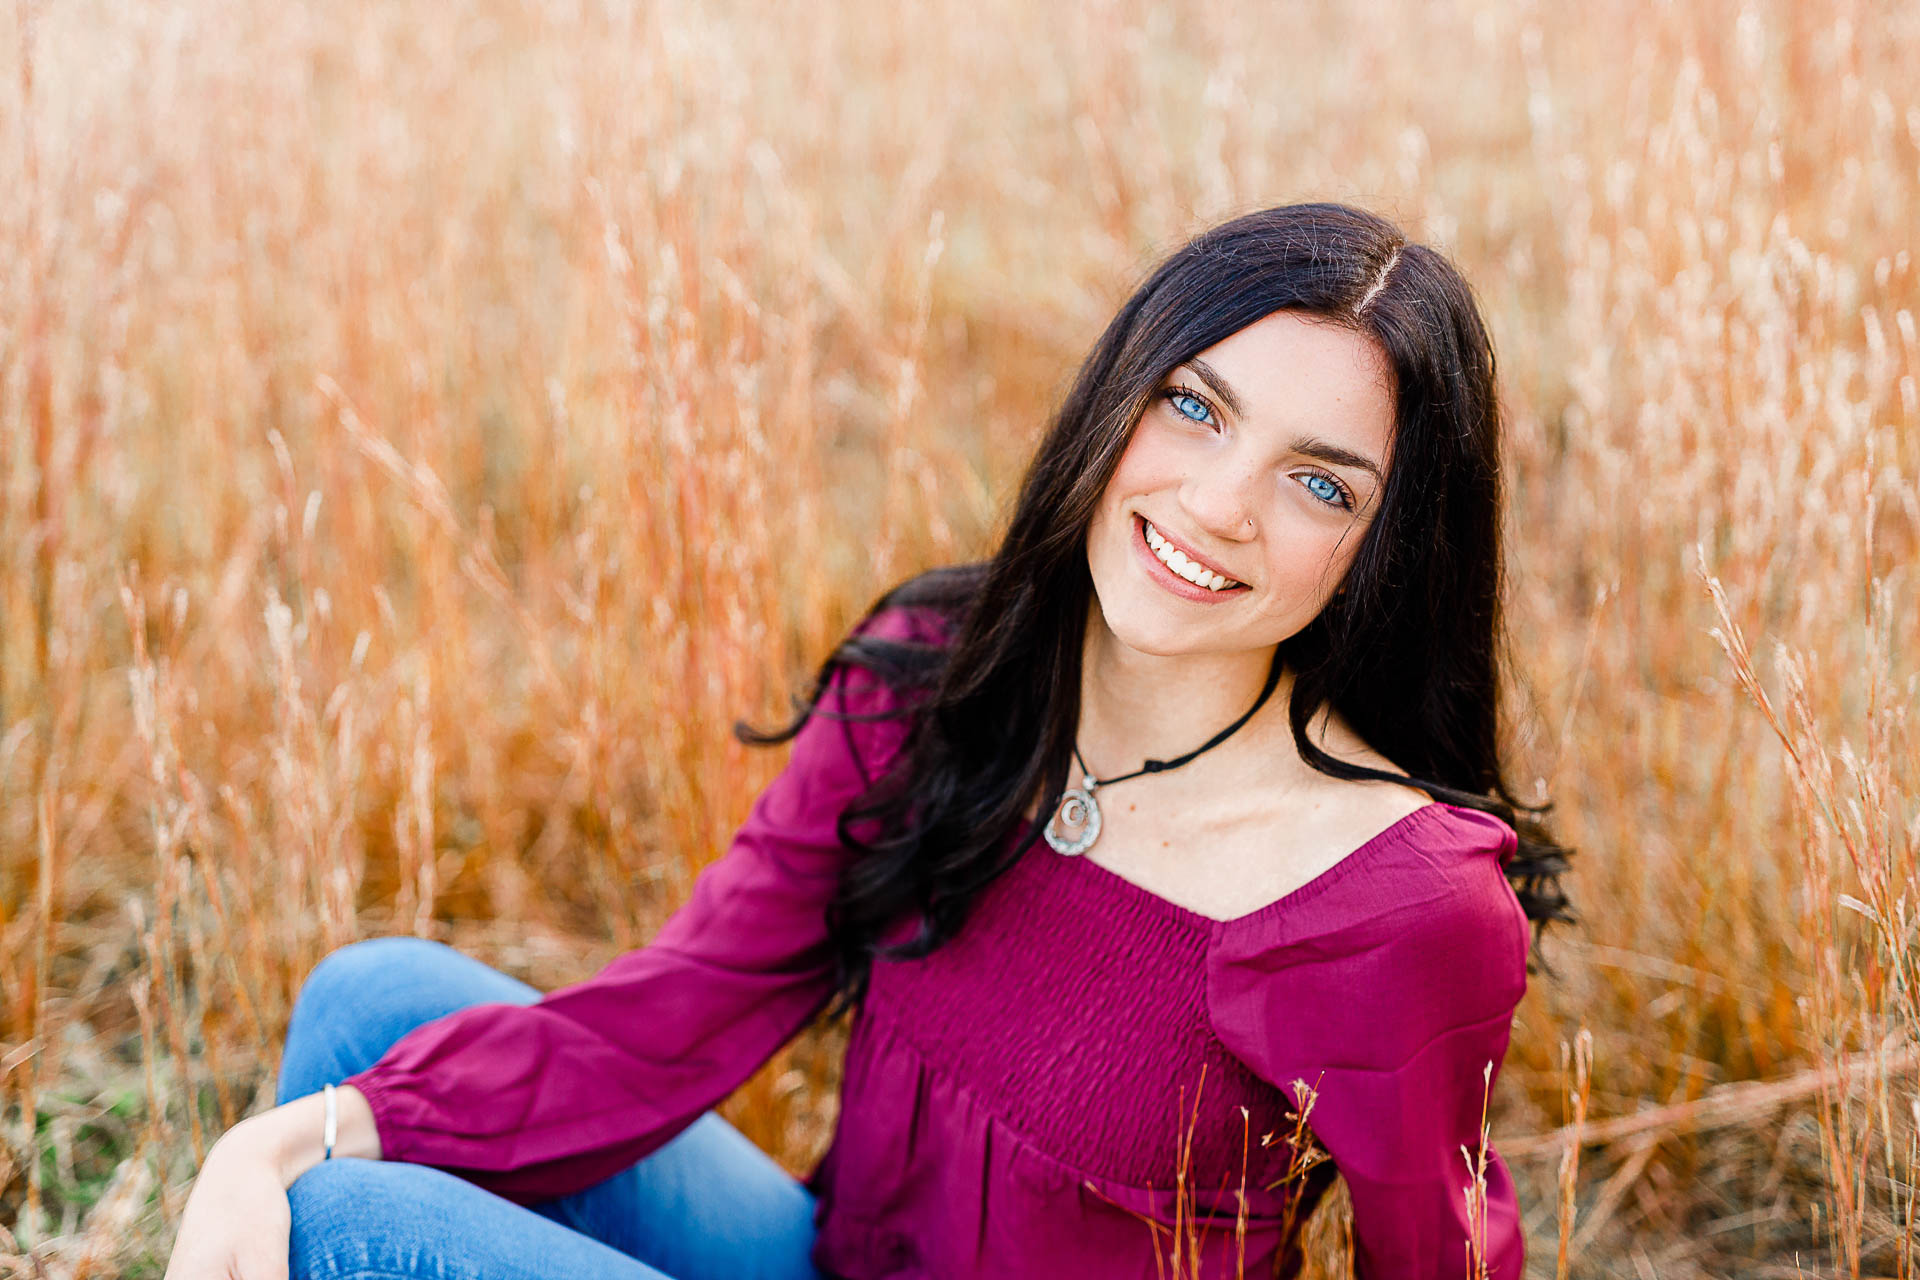 Photo by Duxbury senior photographer Christina Runnals | A high school senior girl with big blue eyes sitting in a field smiling